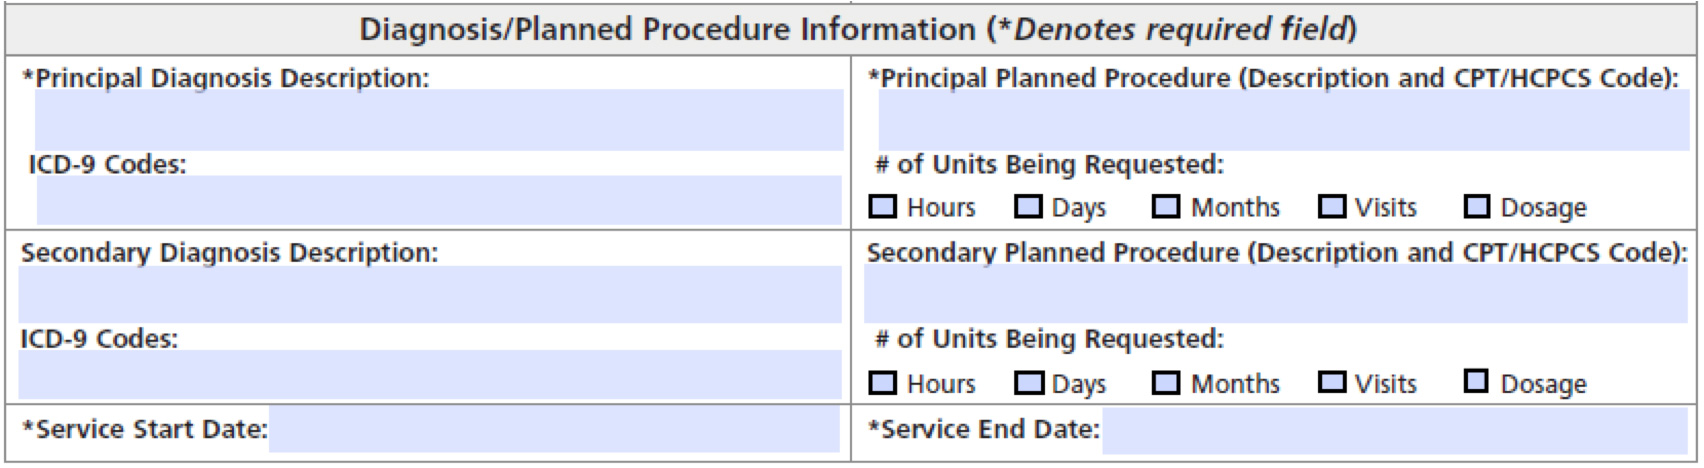 Screenshot of diagnosis form